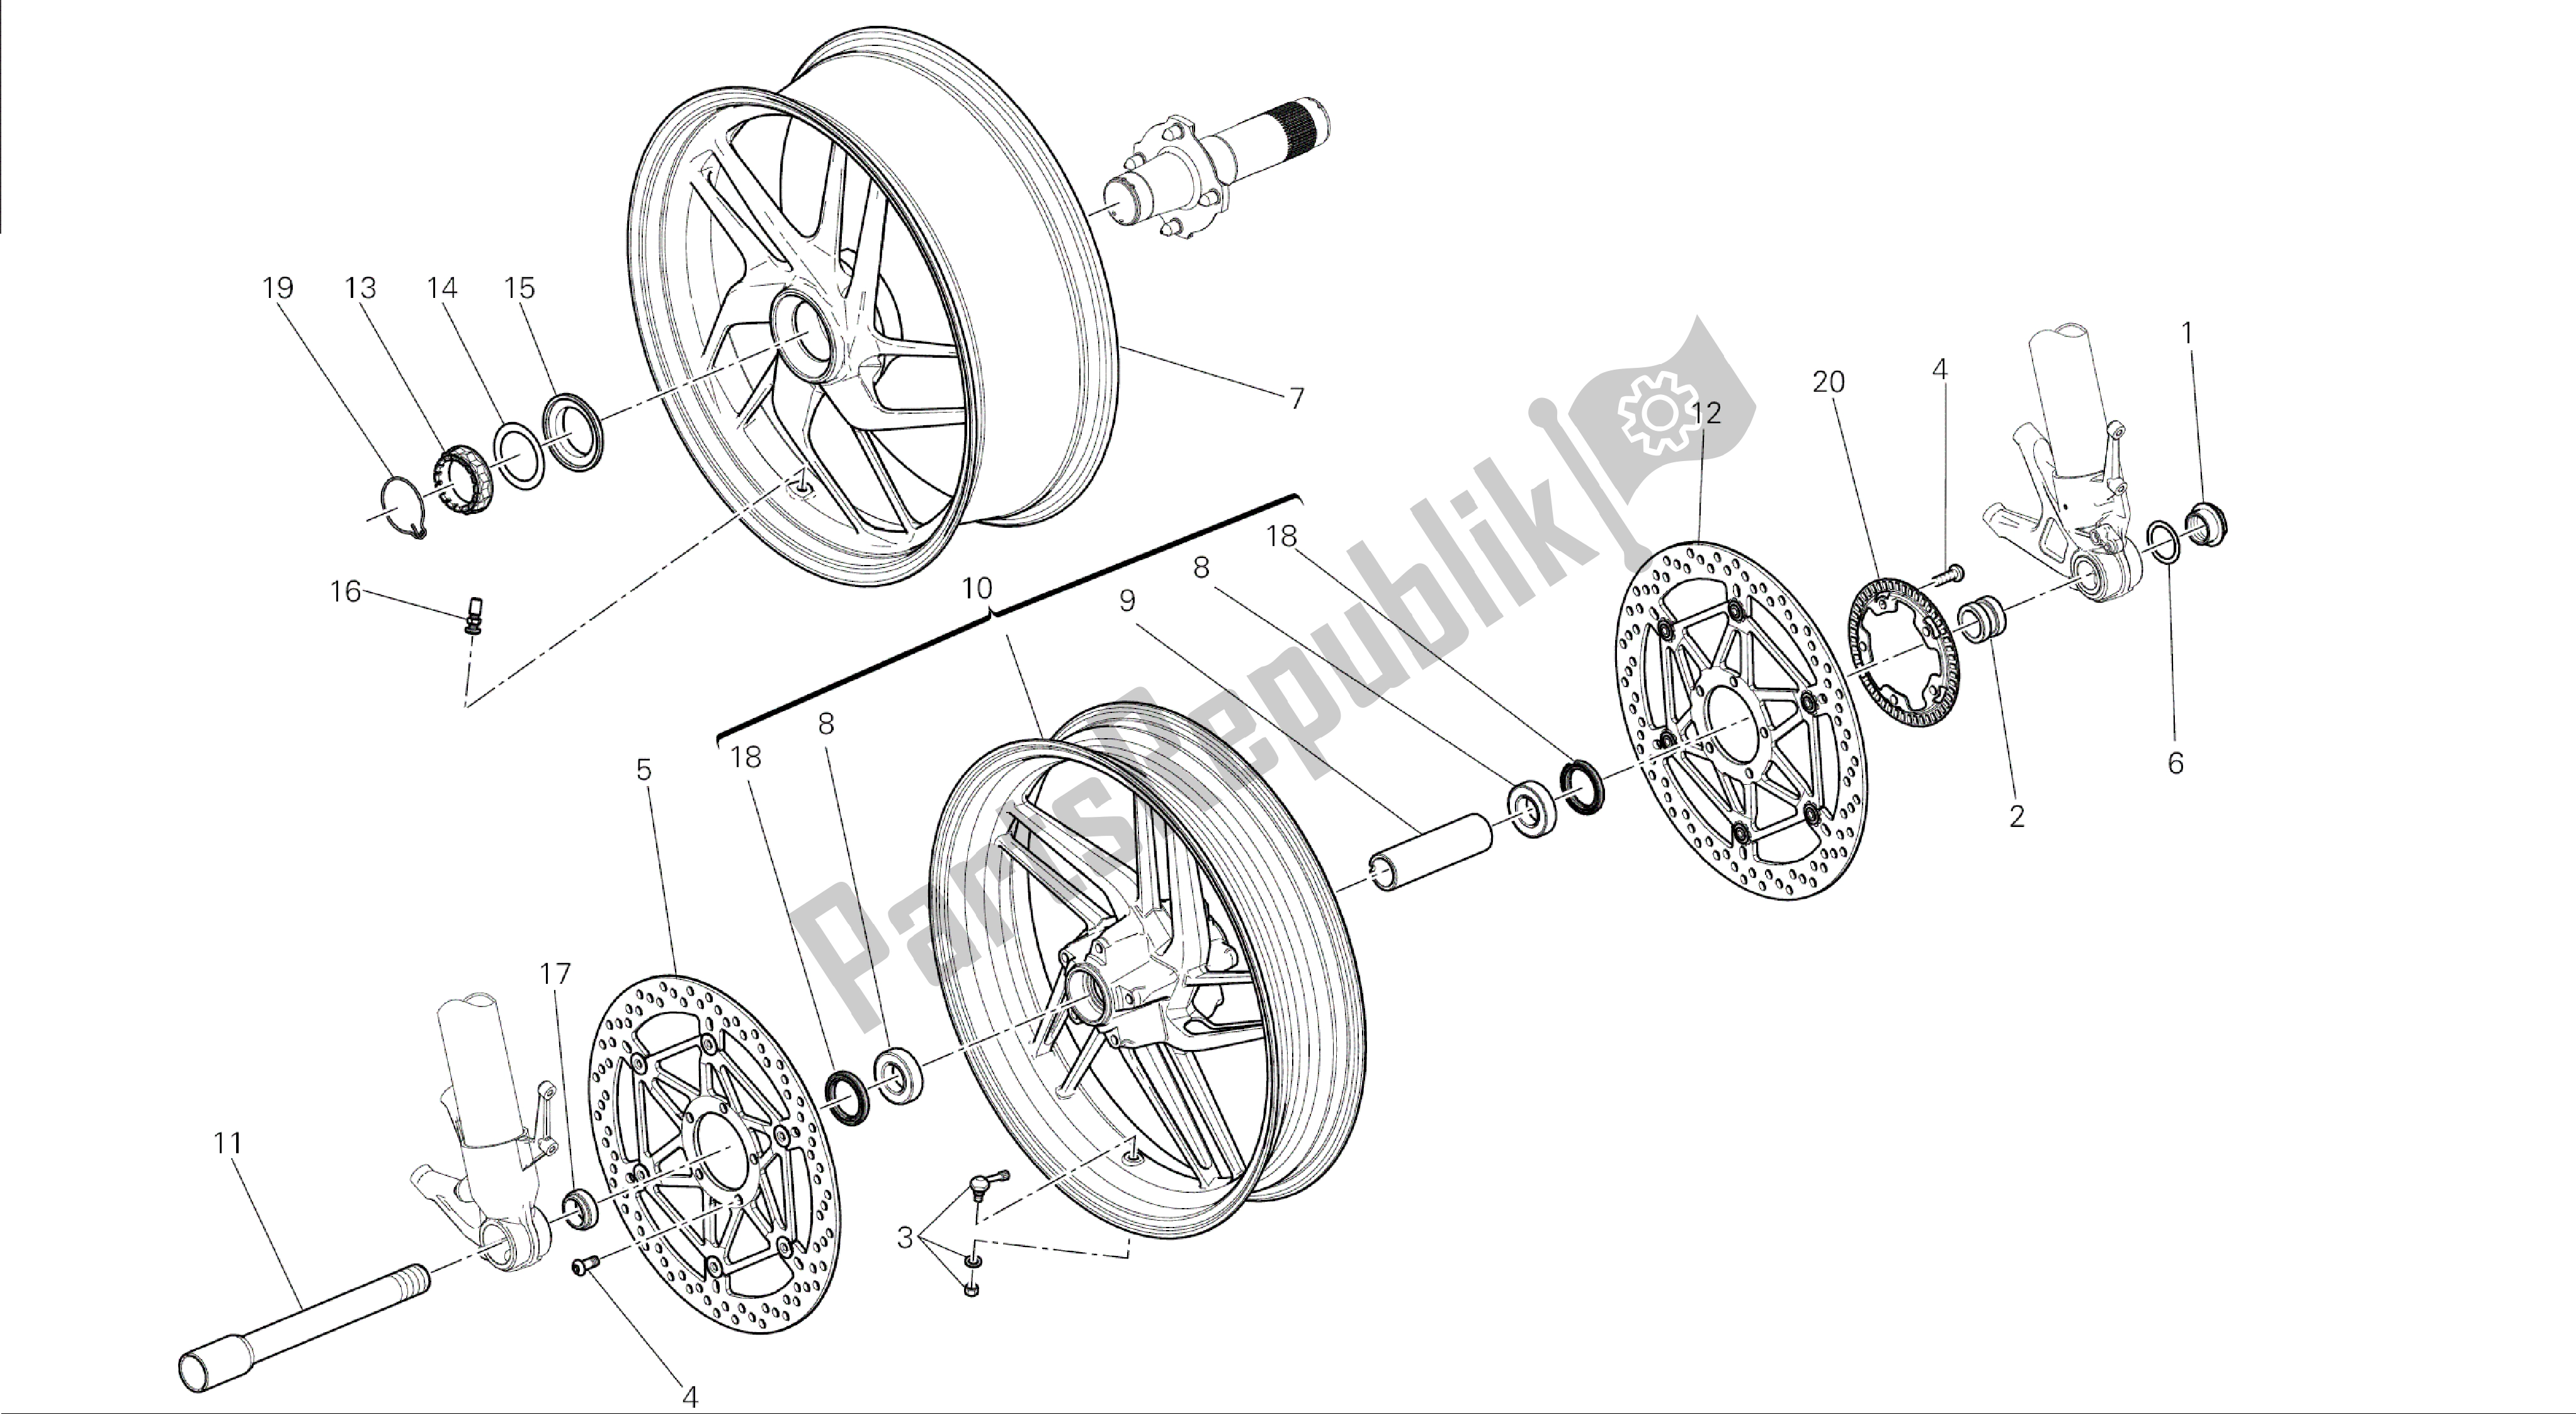 Alle onderdelen voor de Tekening 026 - Ruota Anteriore E Posteriore [mod: 1199abs; Xst: Aus, Bra, Chn, Eur, Fra, Jap] Groepsframe van de Ducati Panigale ABS 1199 2014